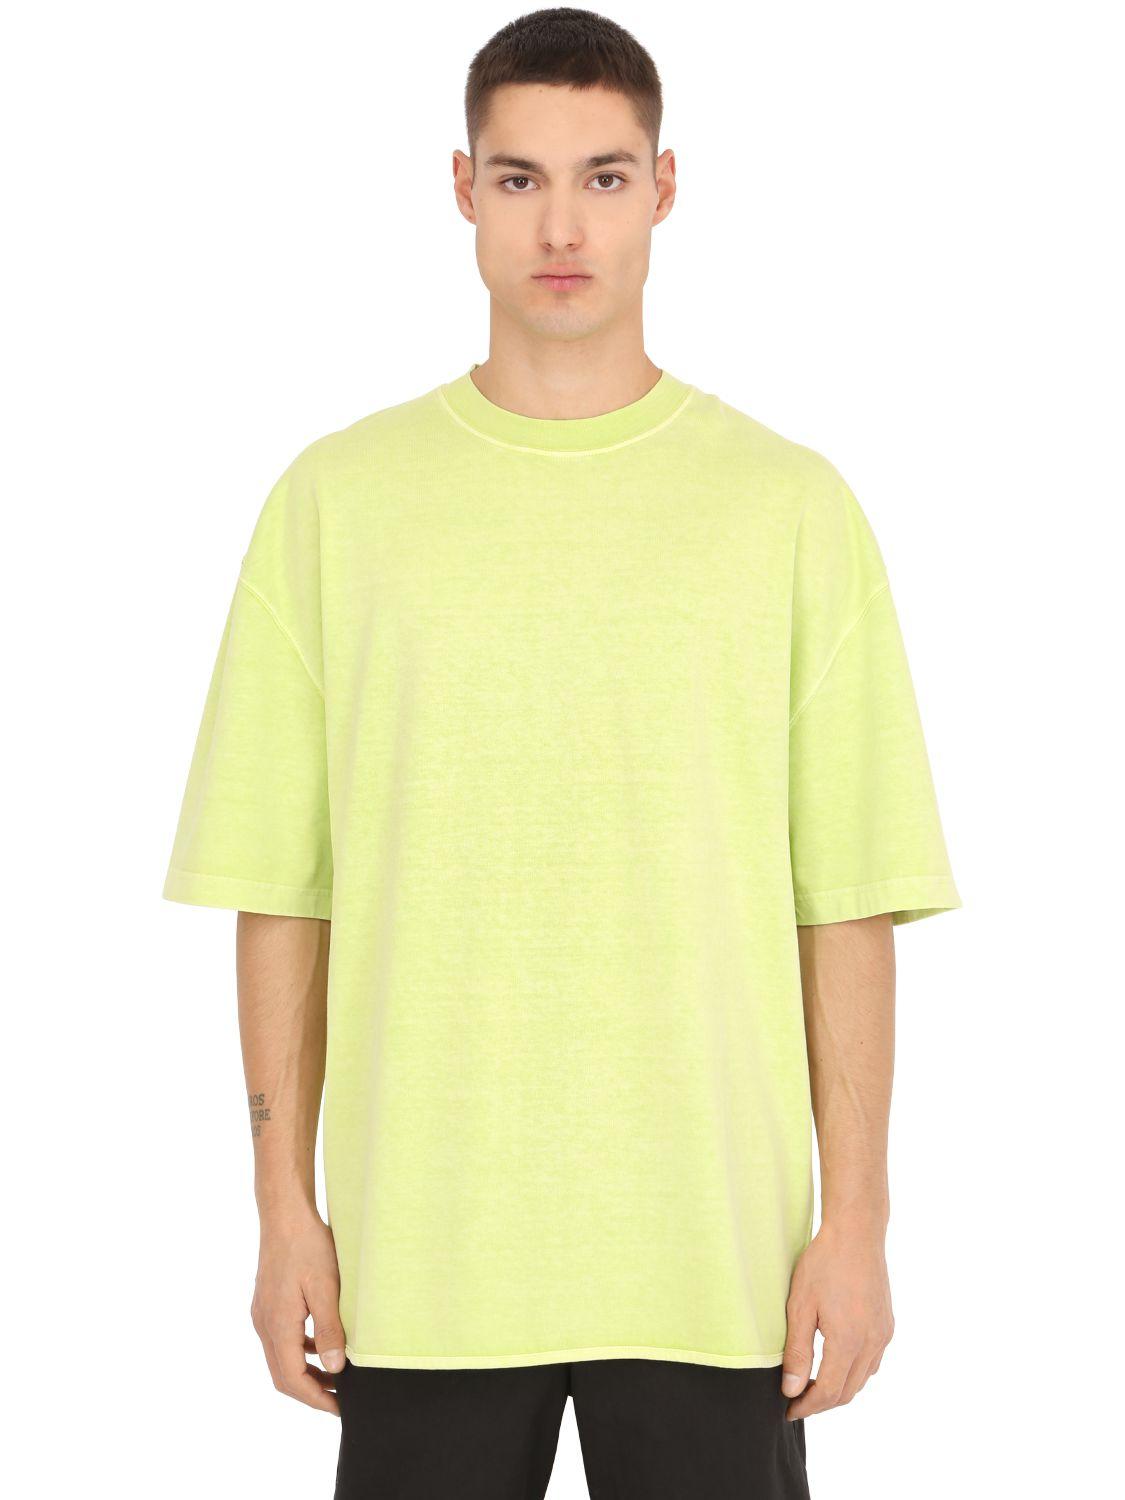 yeezy lime green shirt